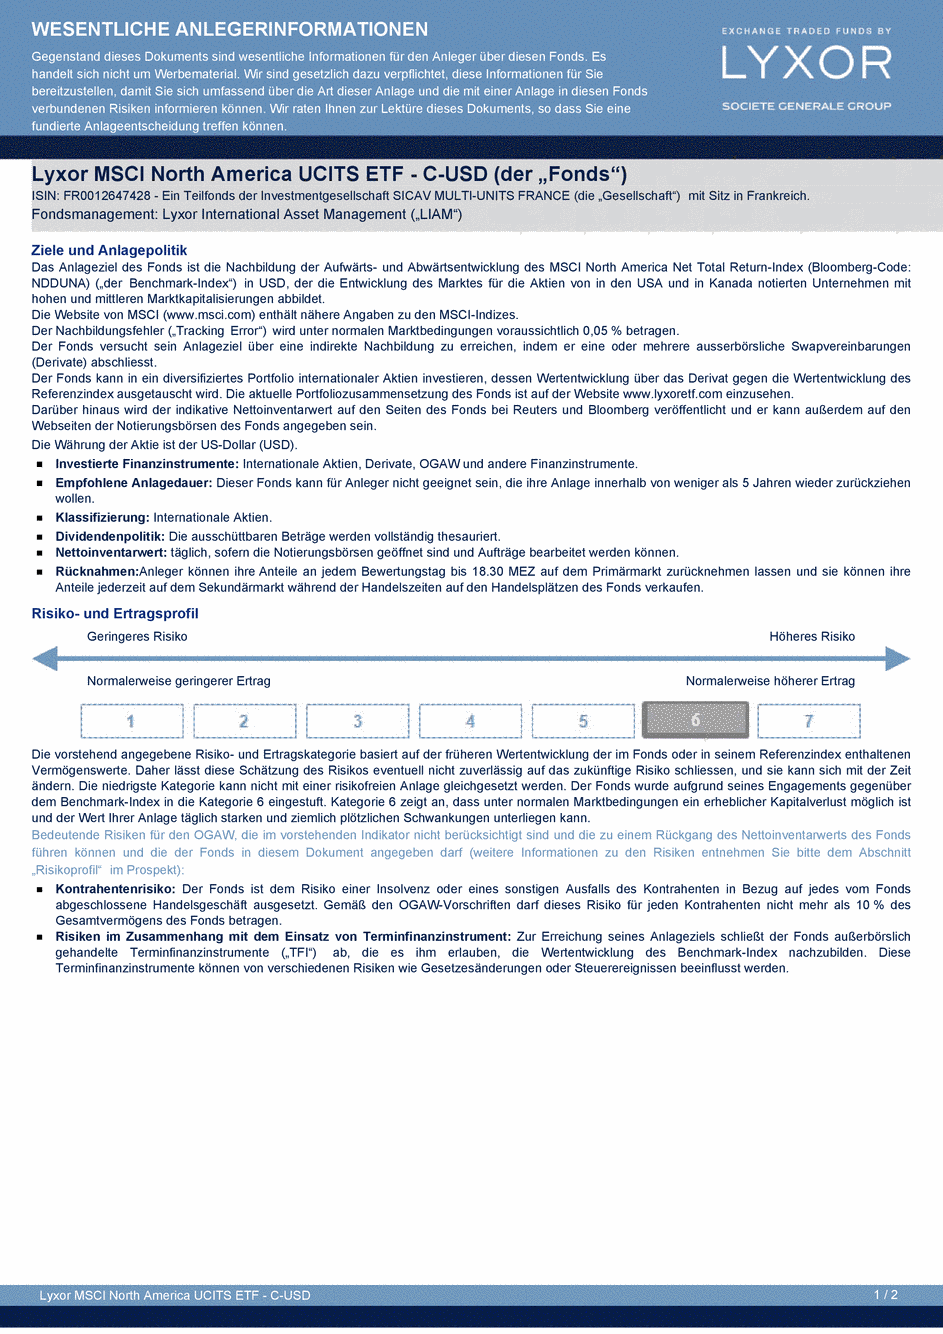 DICI LYXOR MSCI NORTH AMERICA UCITS ETF C-USD - 26/03/2015 - Allemand